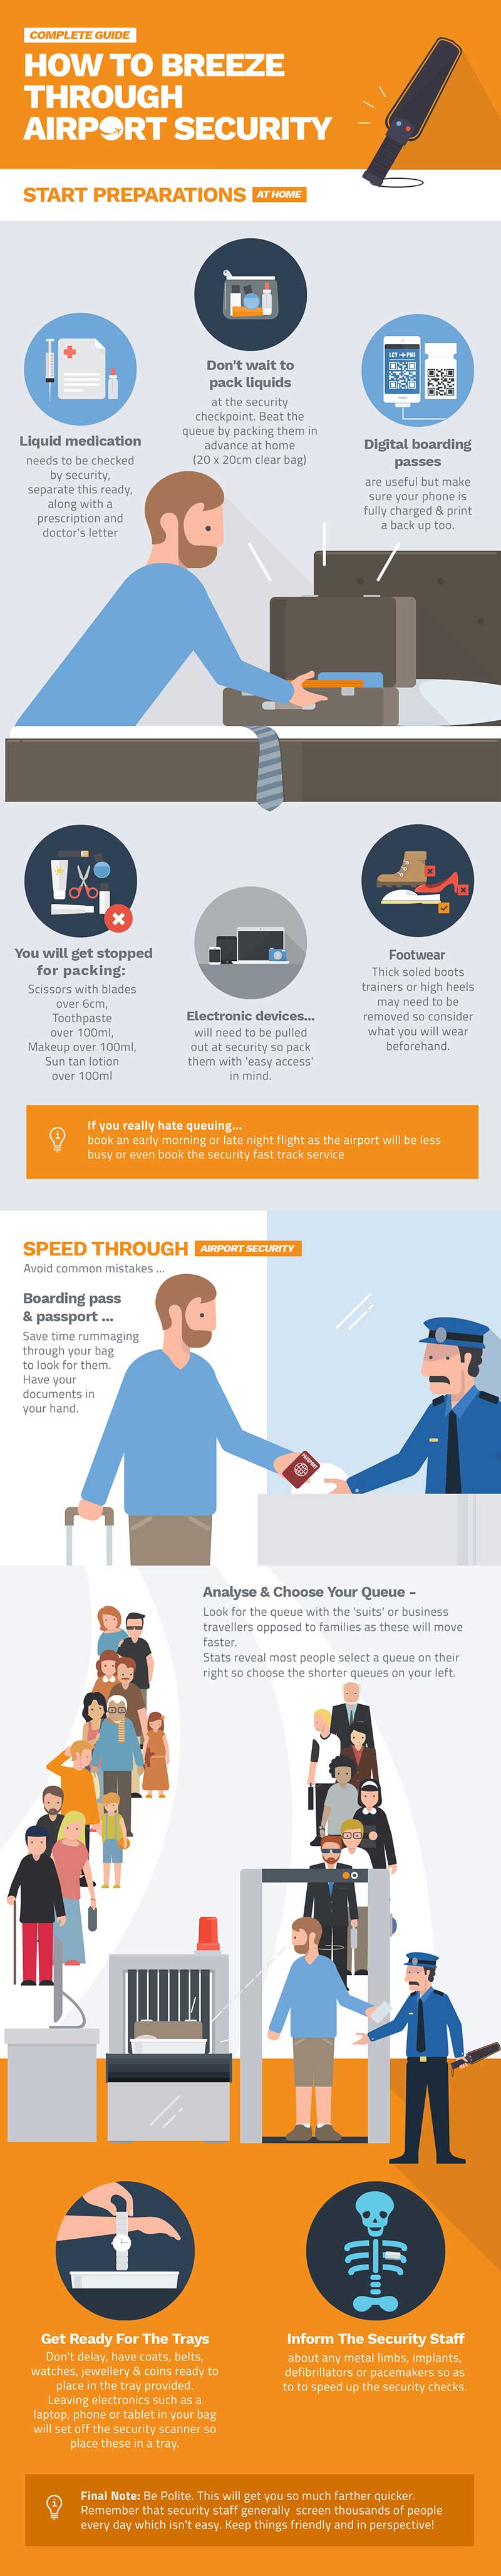 palmaairport airport security infographic 01